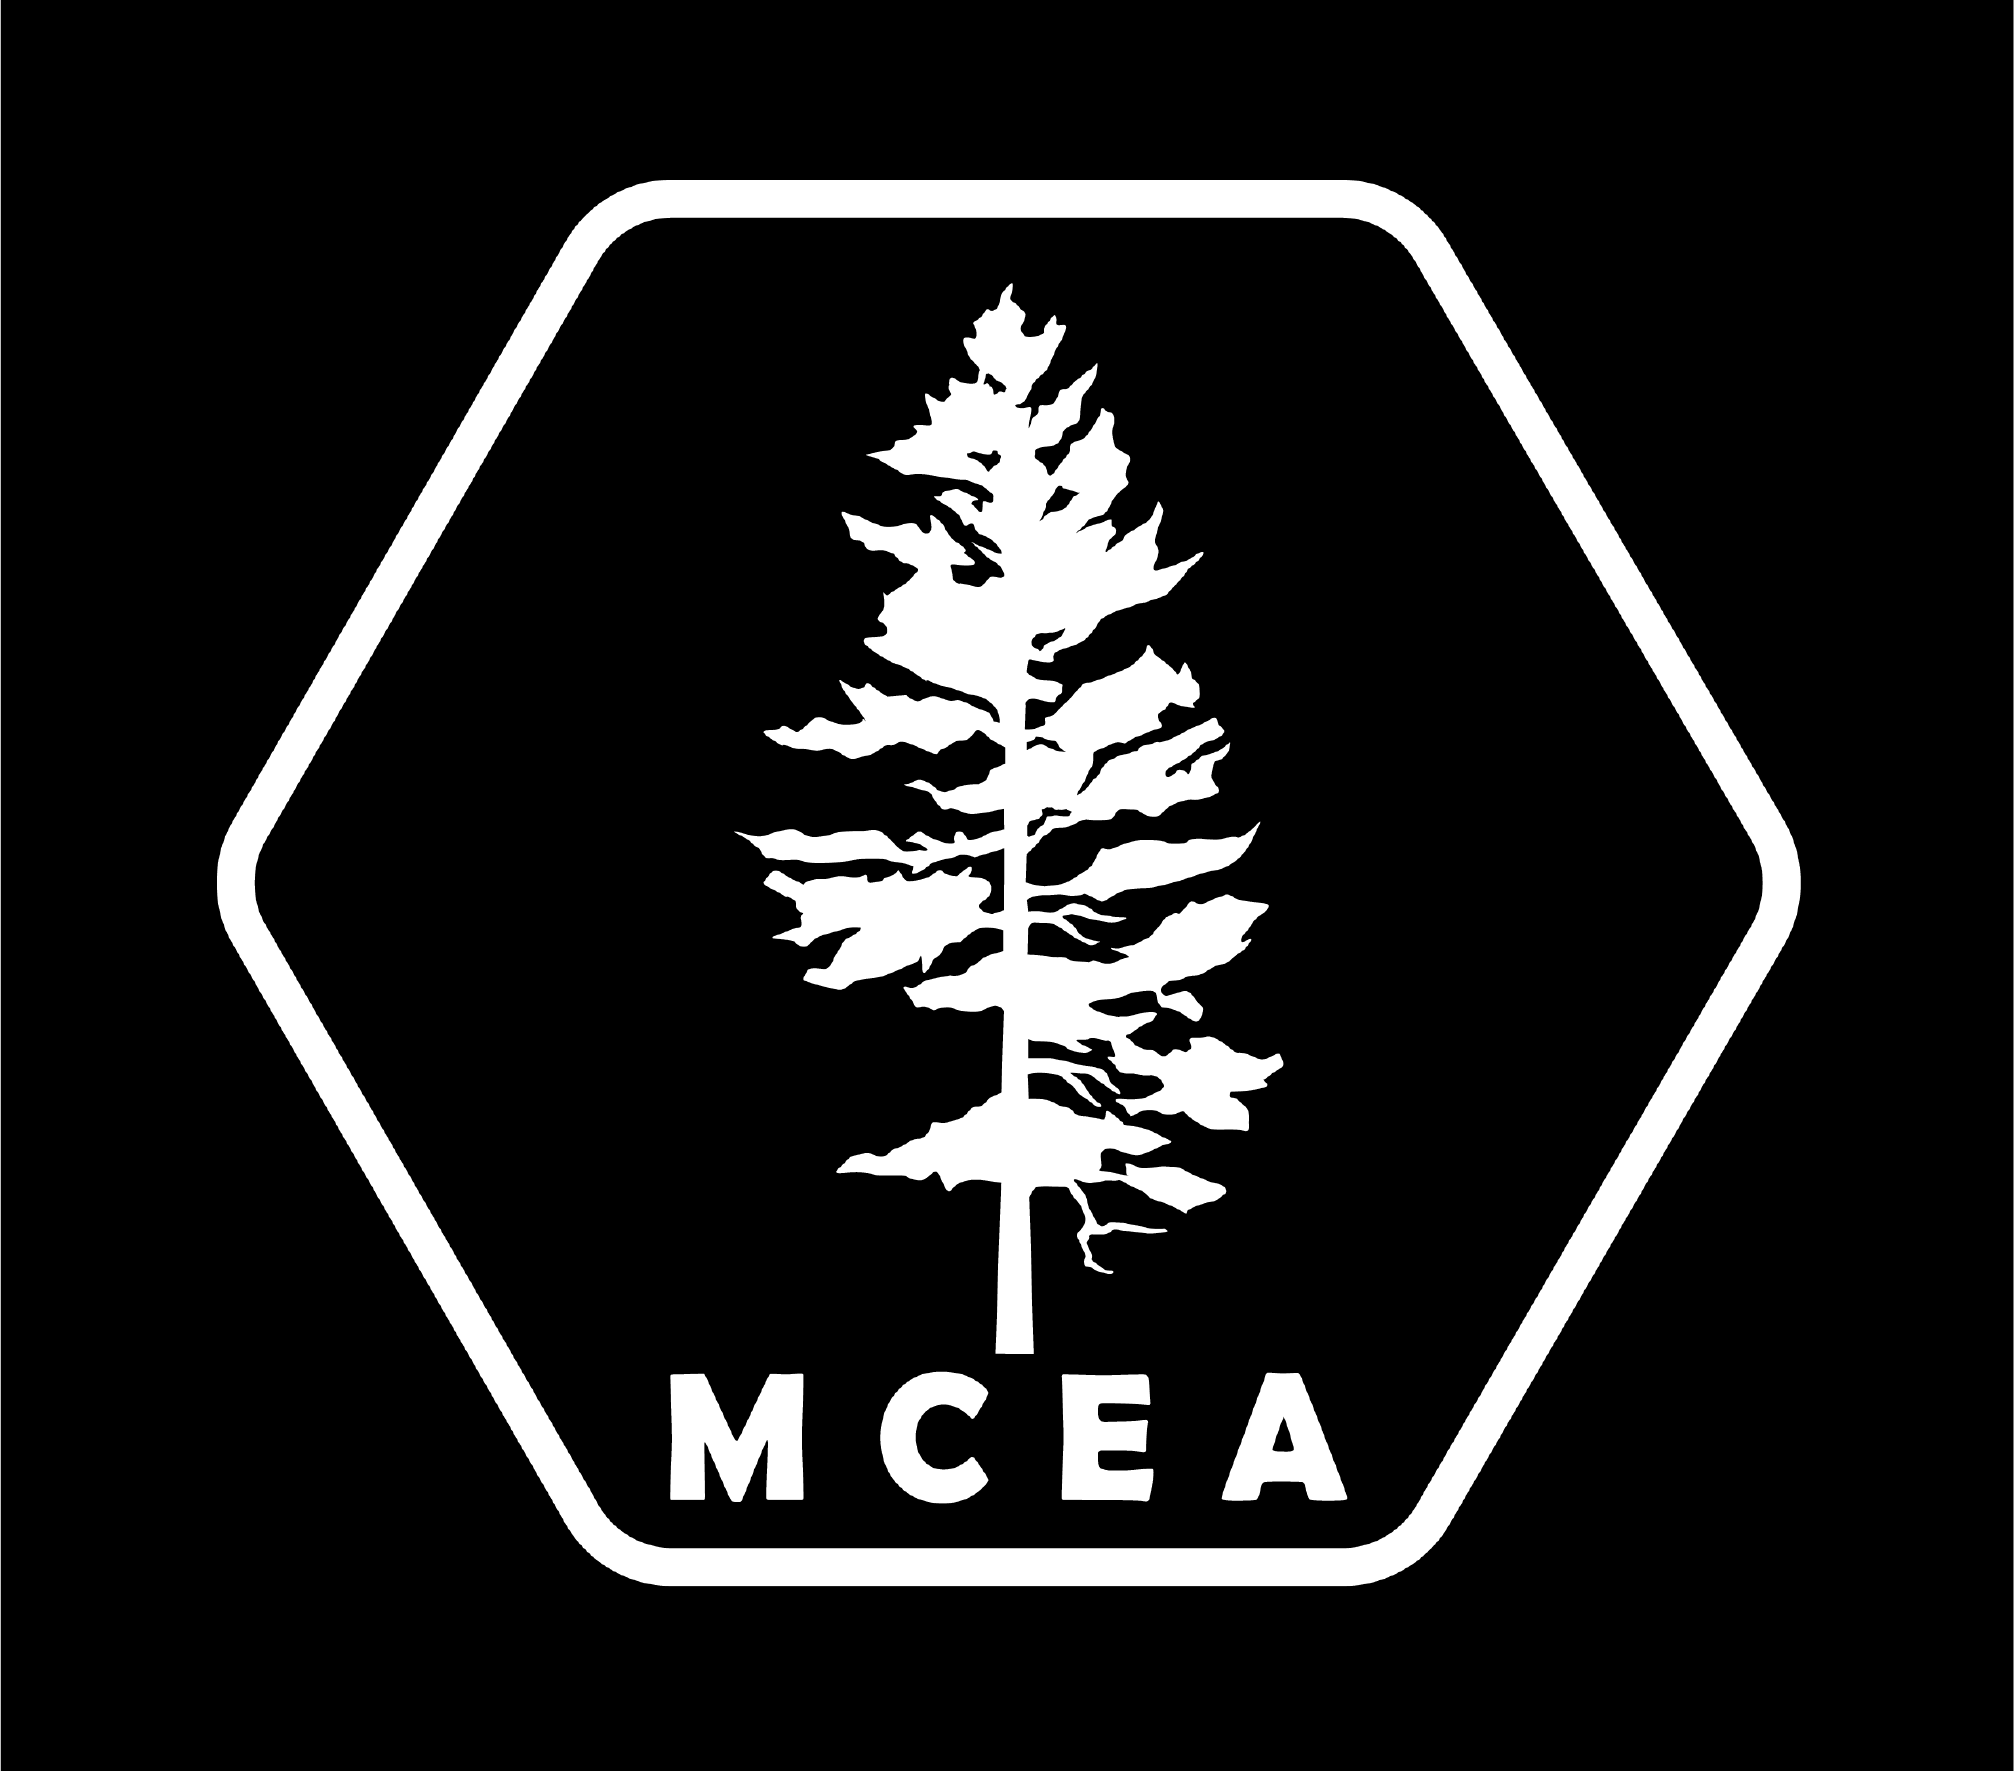 Black Hex logo with MCEA